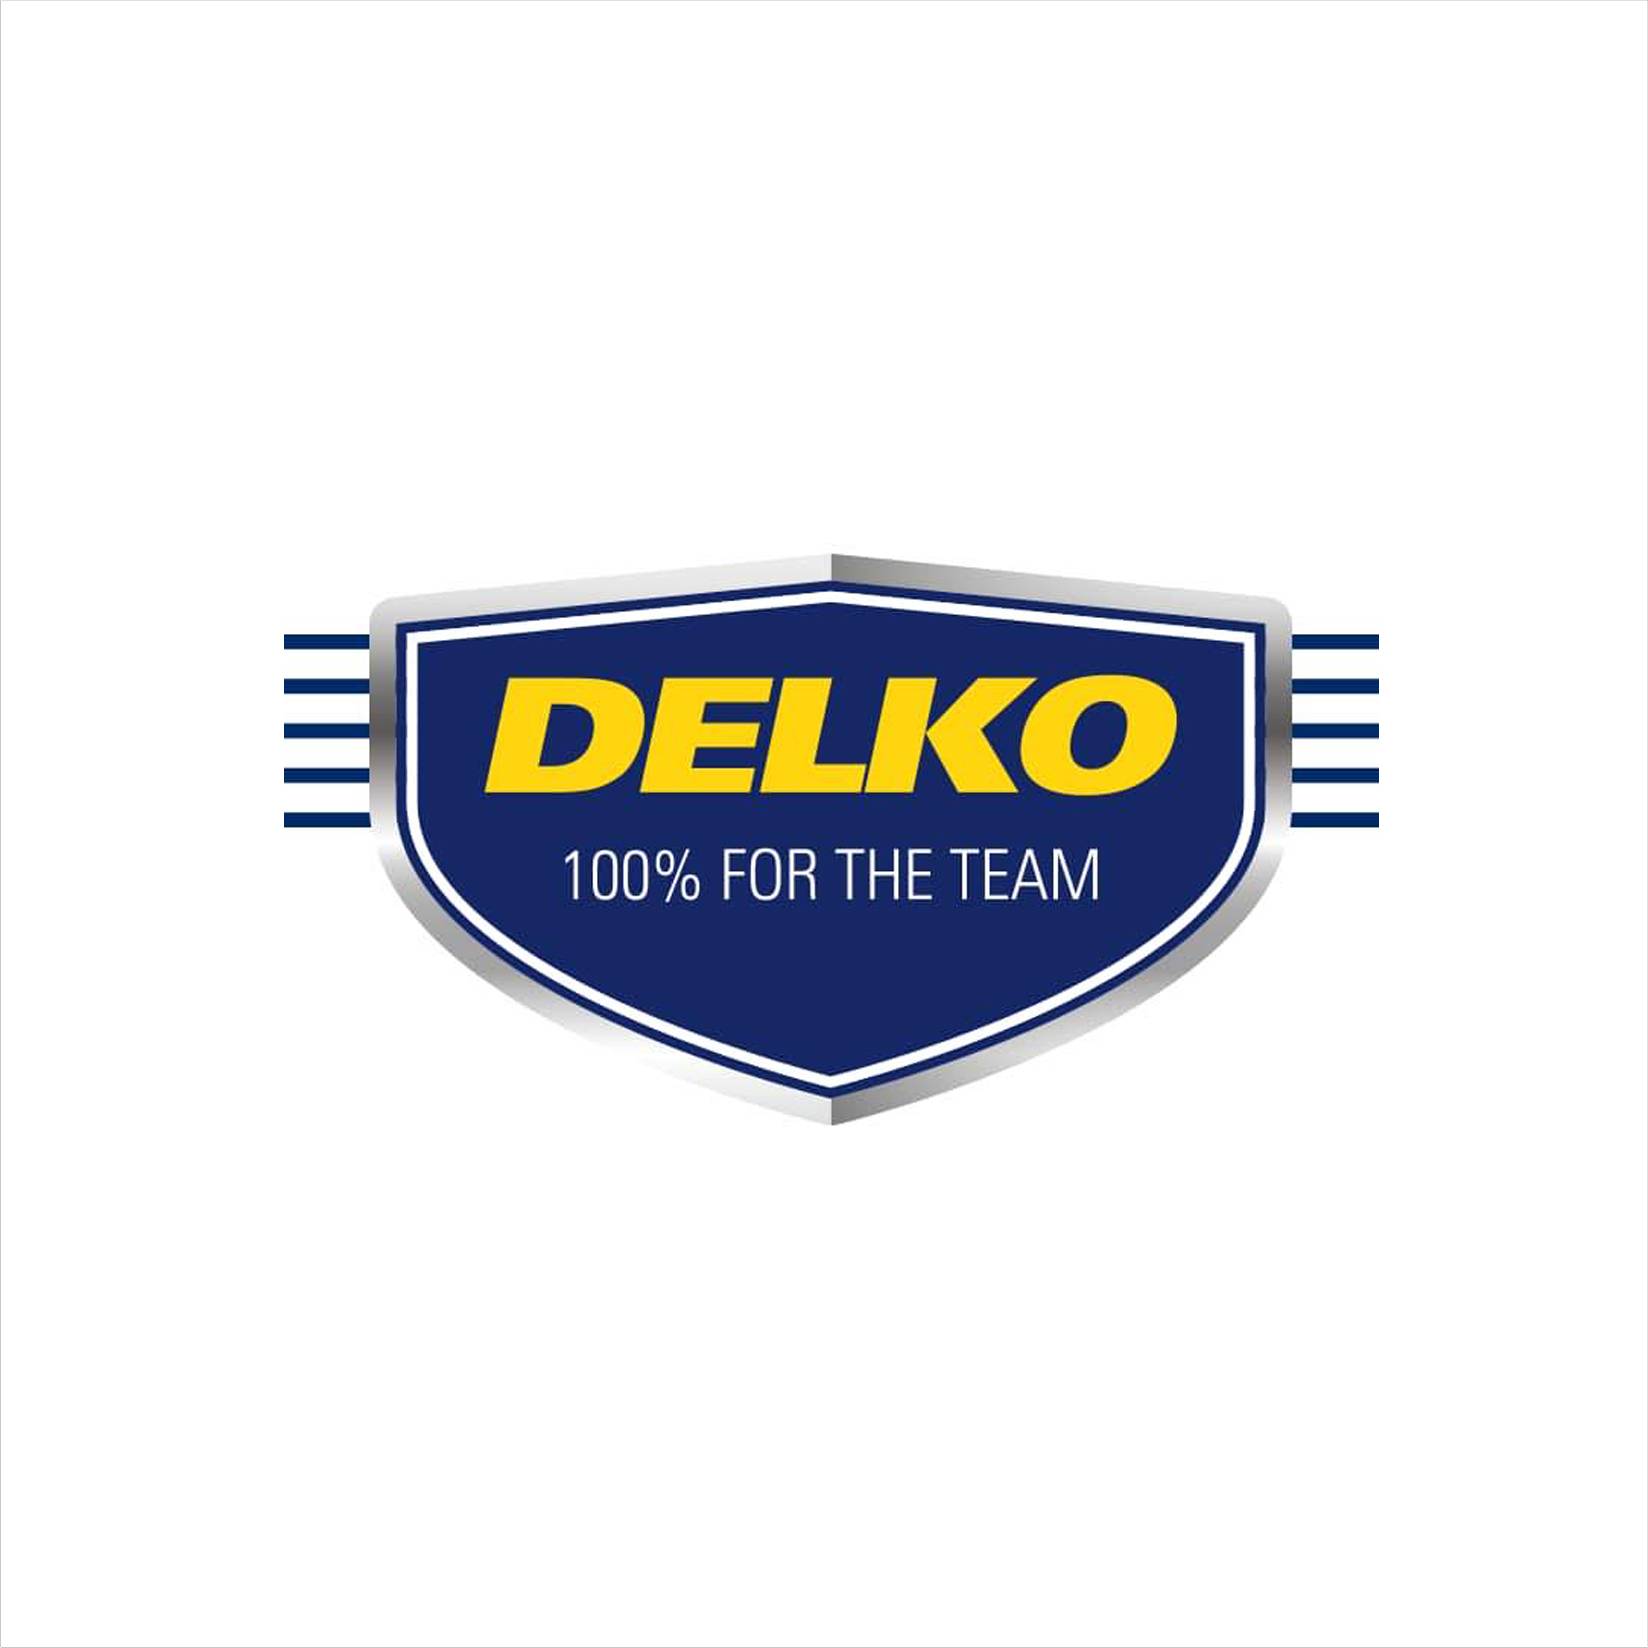 Logo de l'équipe cycliste Team Delko